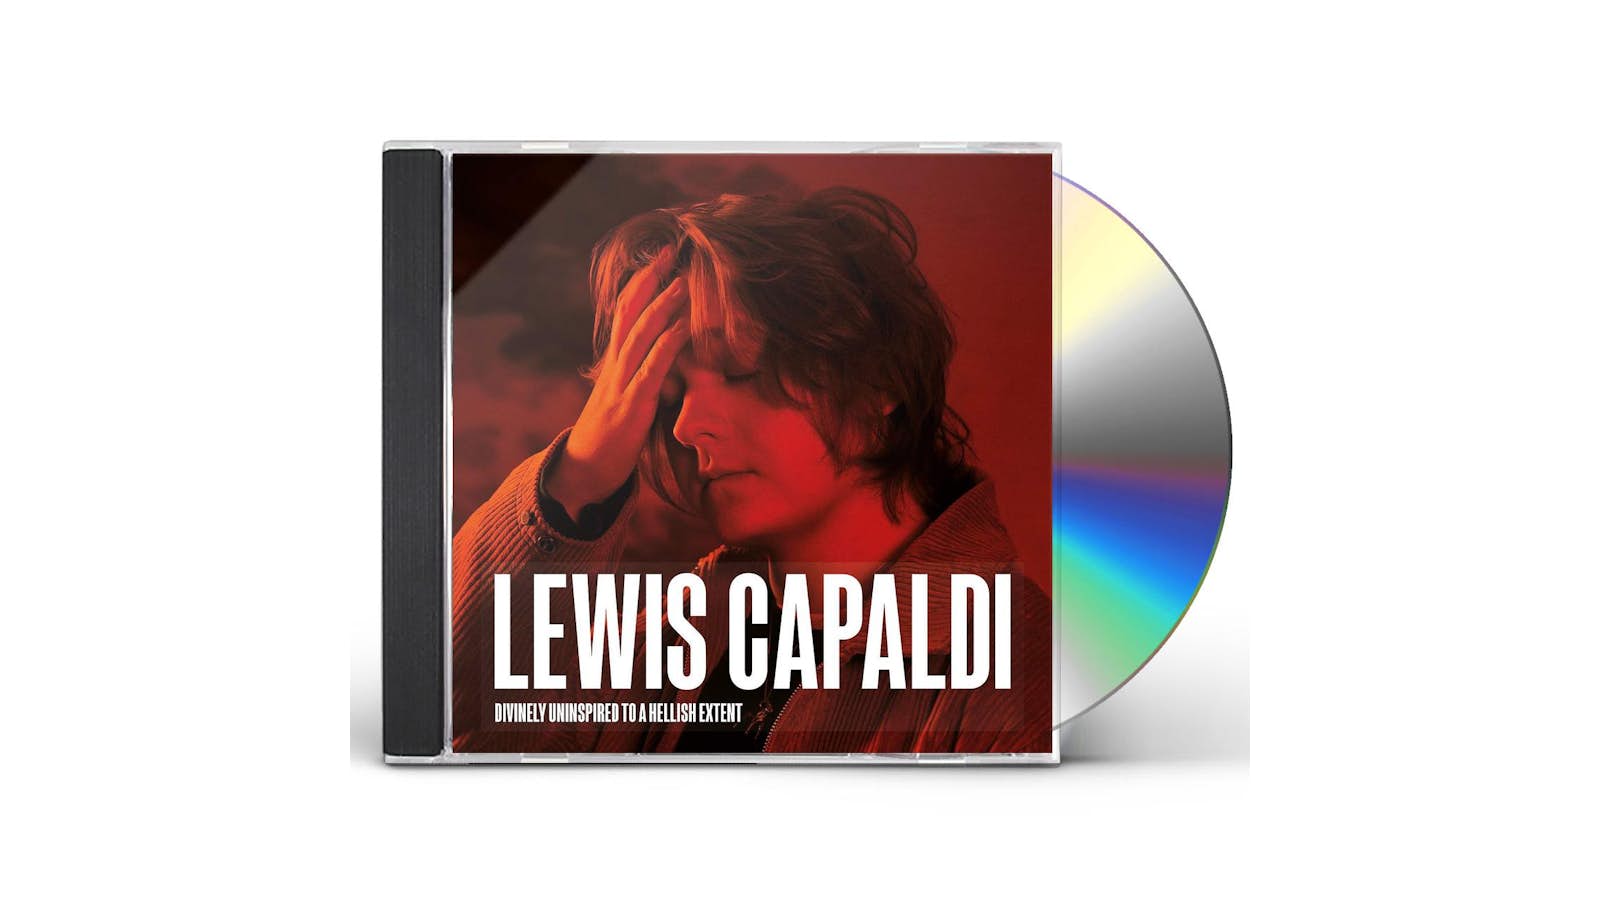 Backstreetmerch, Lewis Capaldi CDs